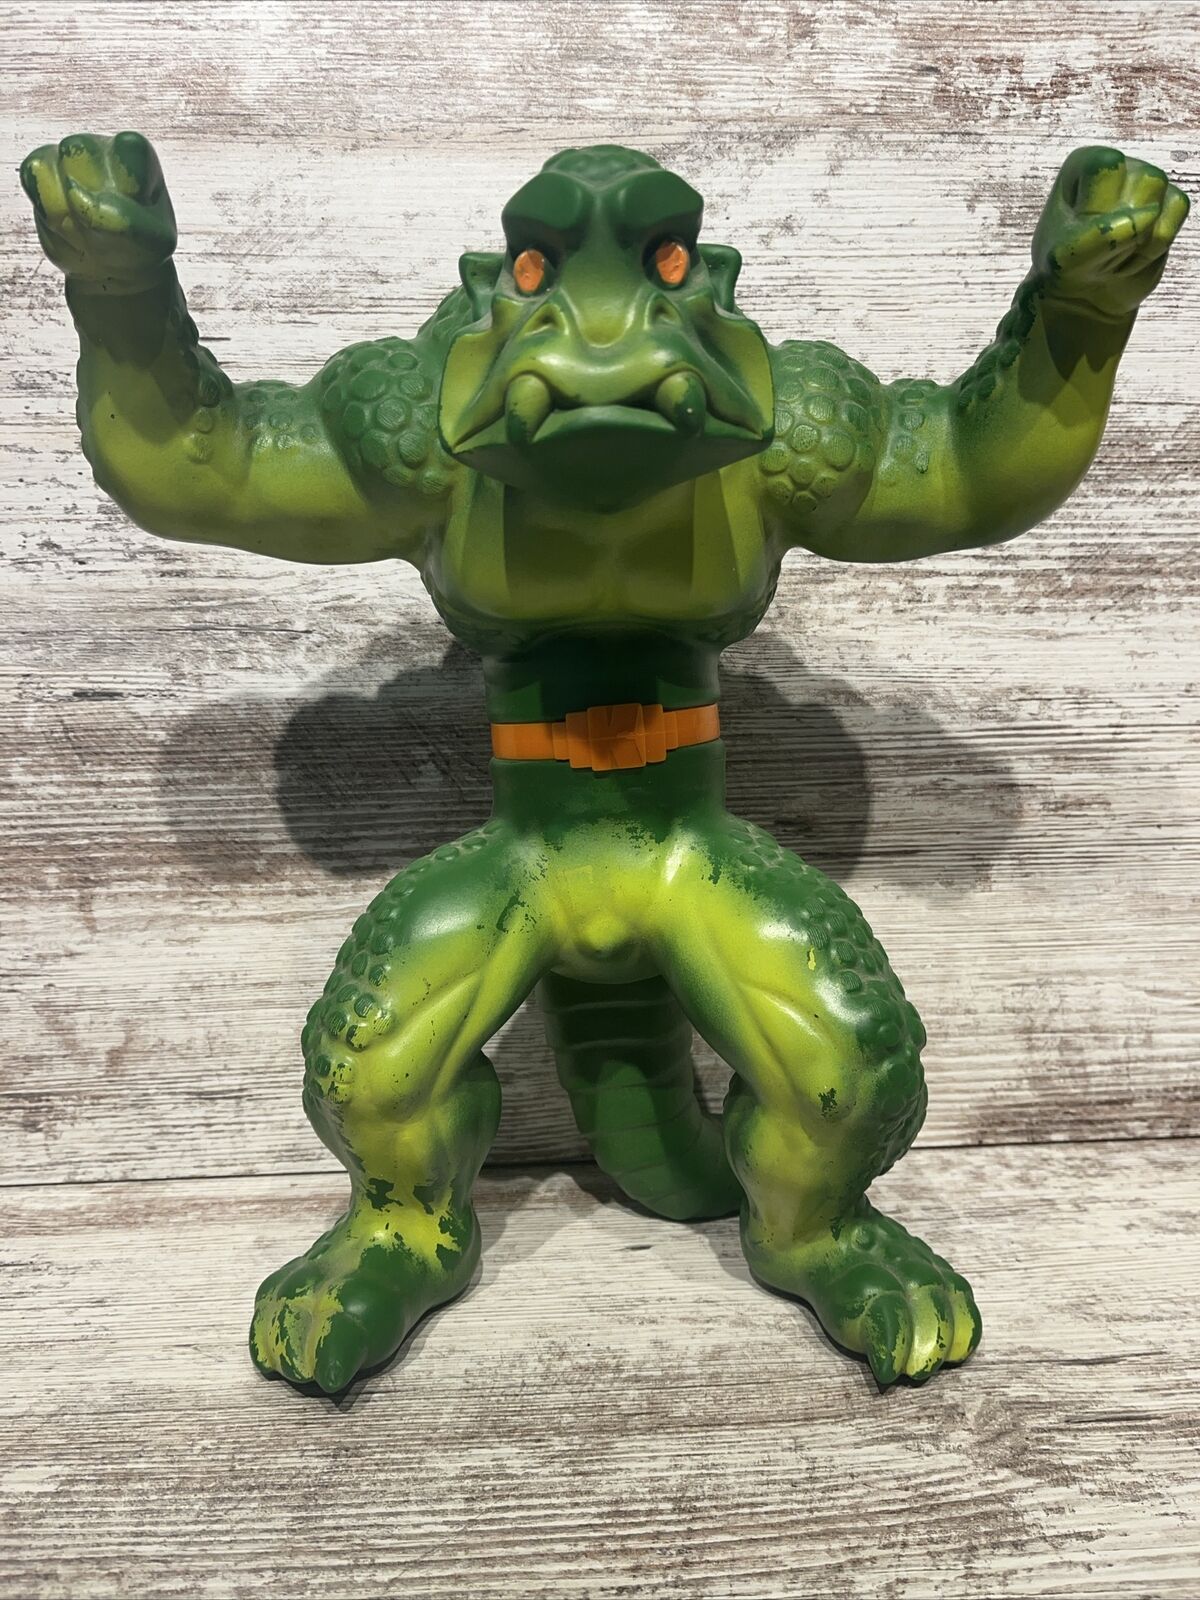 Vintage Mattel Stretch Armstrong Krusher Green Monster 1979